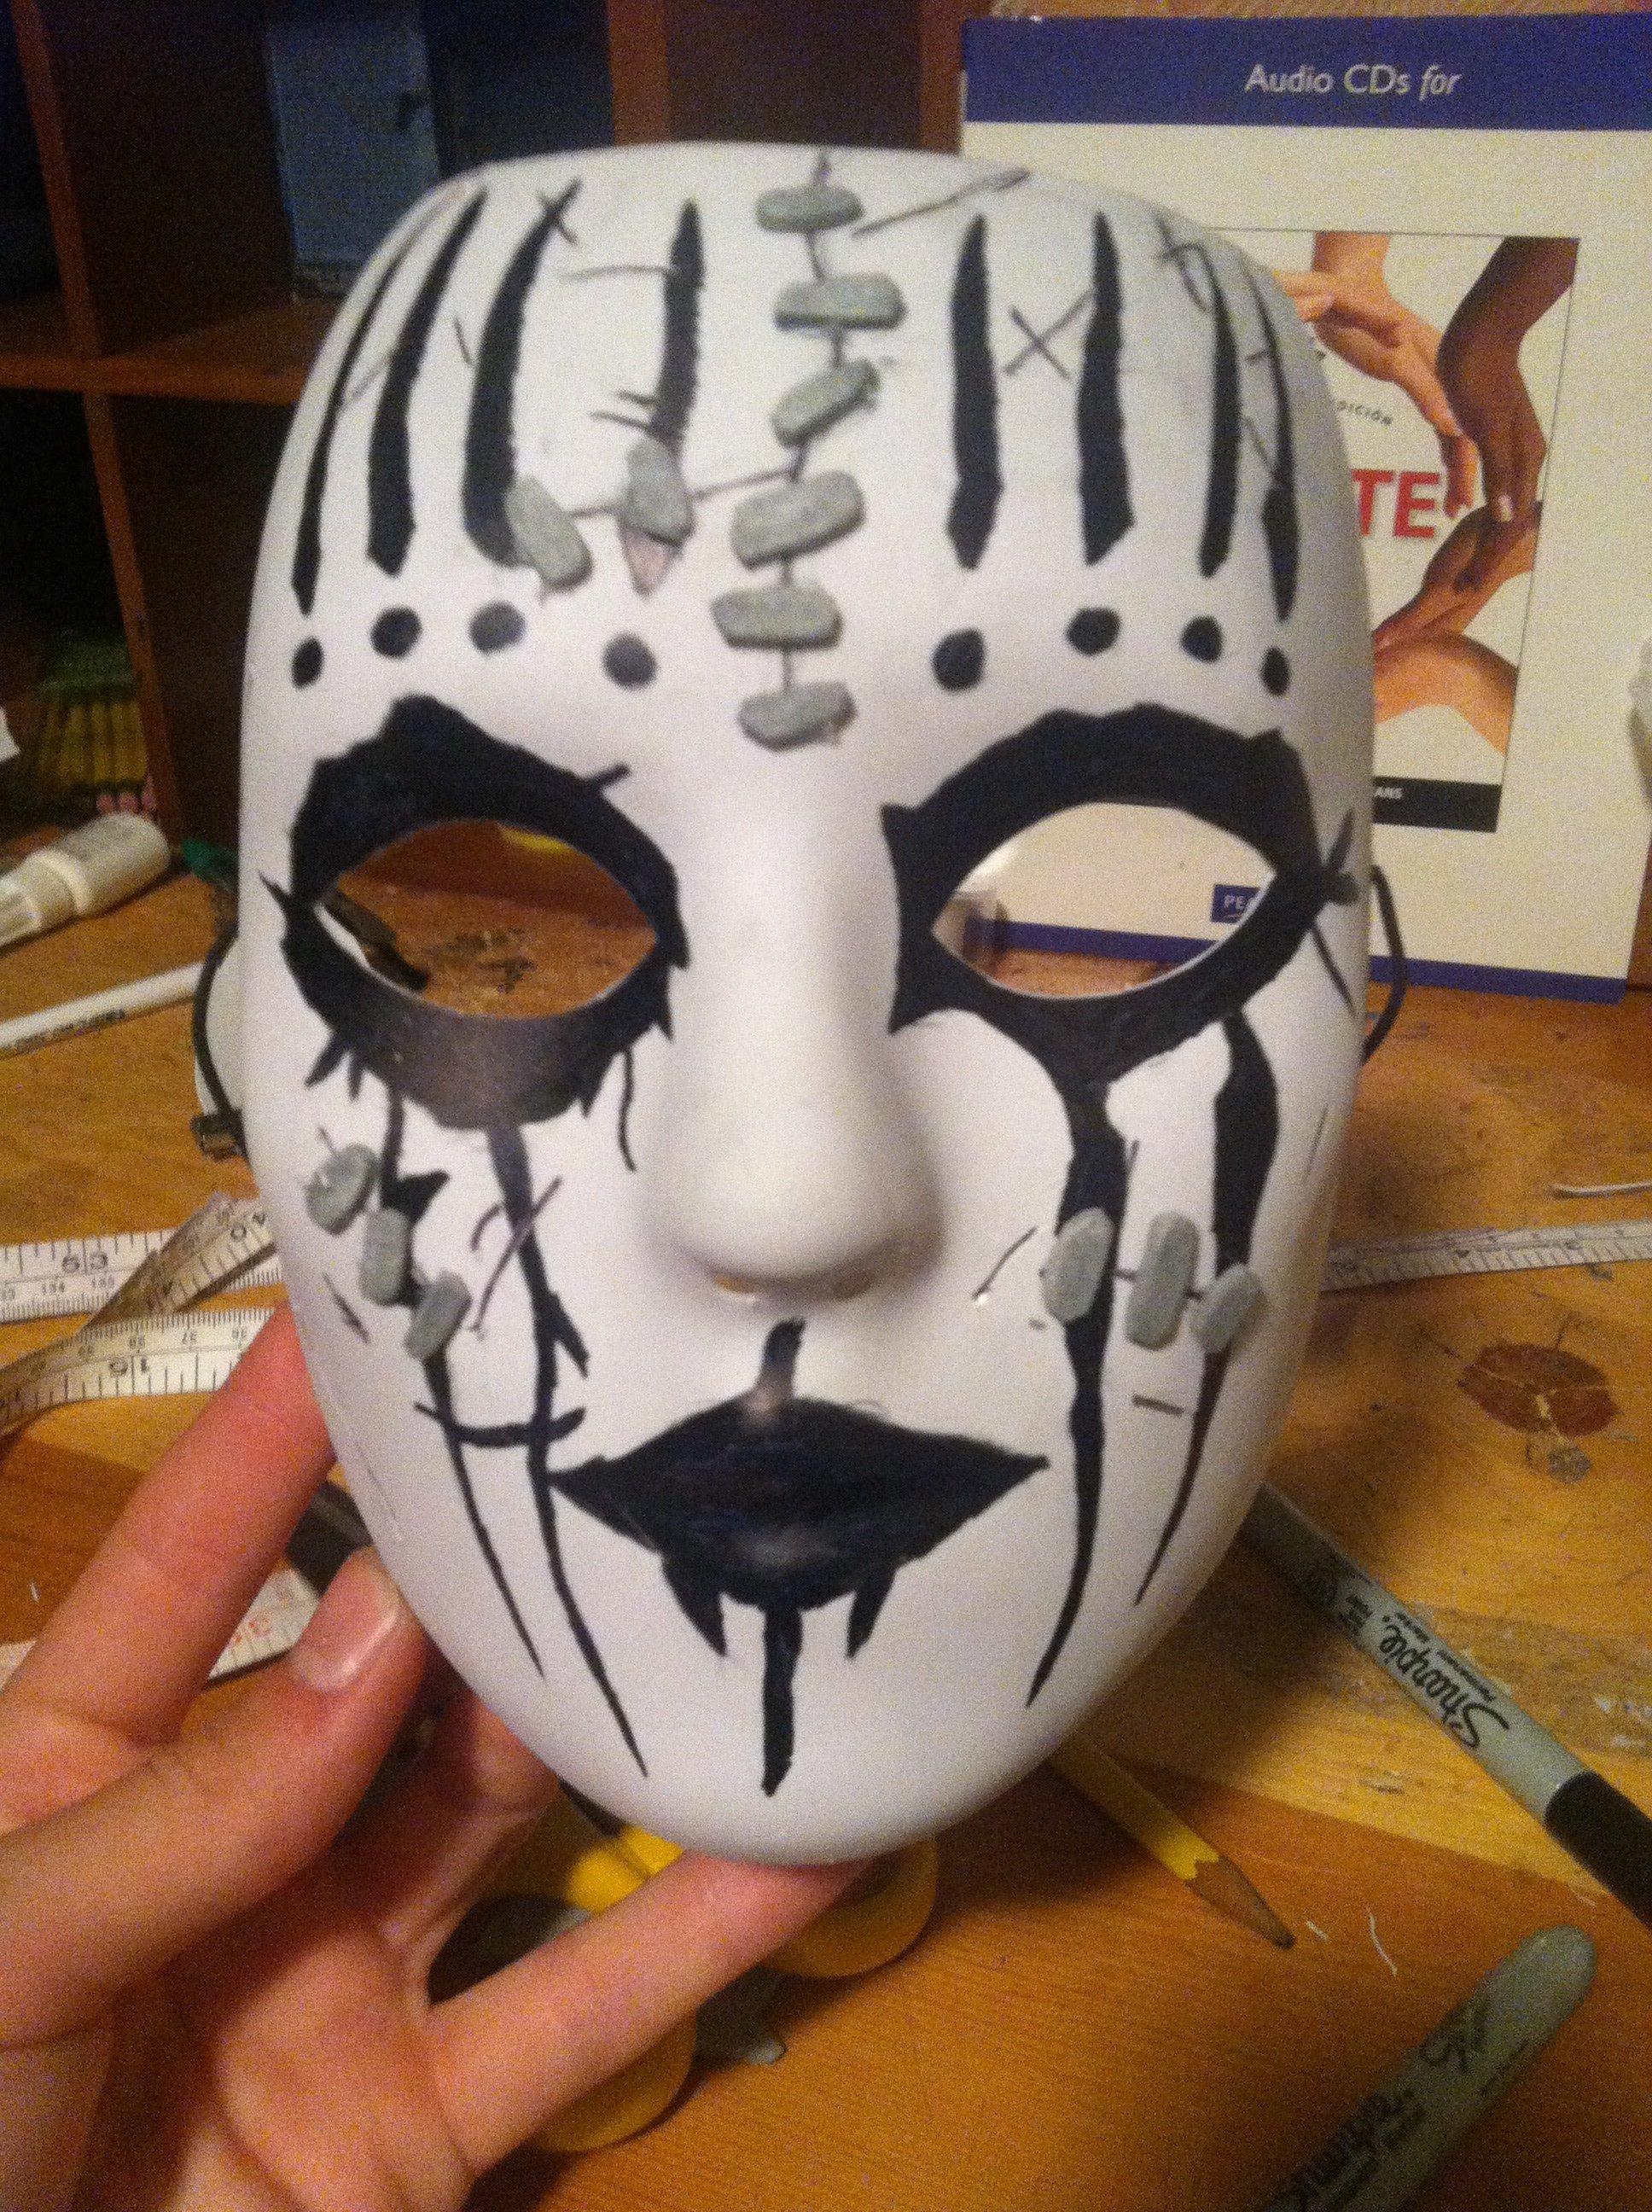 Joey Jordison Slipknot All Hope Is Gone mask | Halo Costume and Prop Maker Community 405th